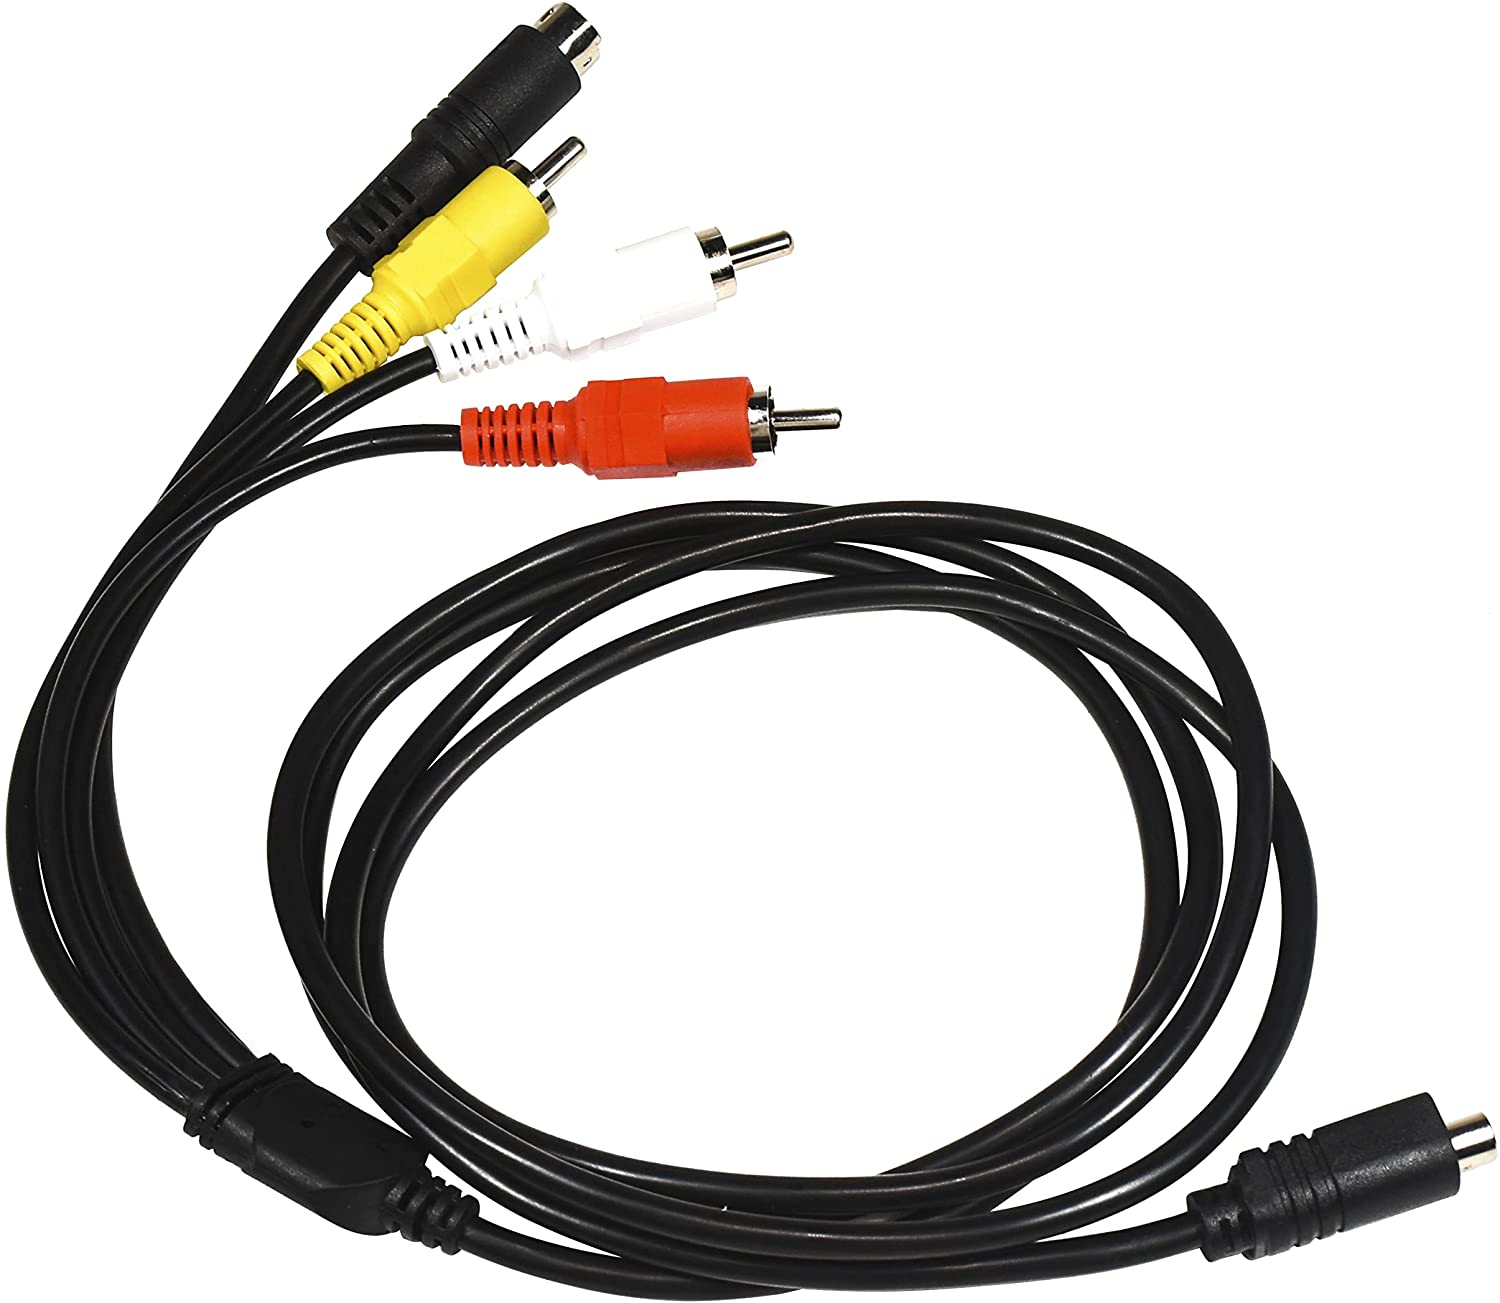 HQRP AV Audio Video Cable / Cord compatible with SONY Handycam DCR-SR220 /  DCR-SR220D / DCR-SR300 / DCR-SR42 Camcorder - Walmart.com